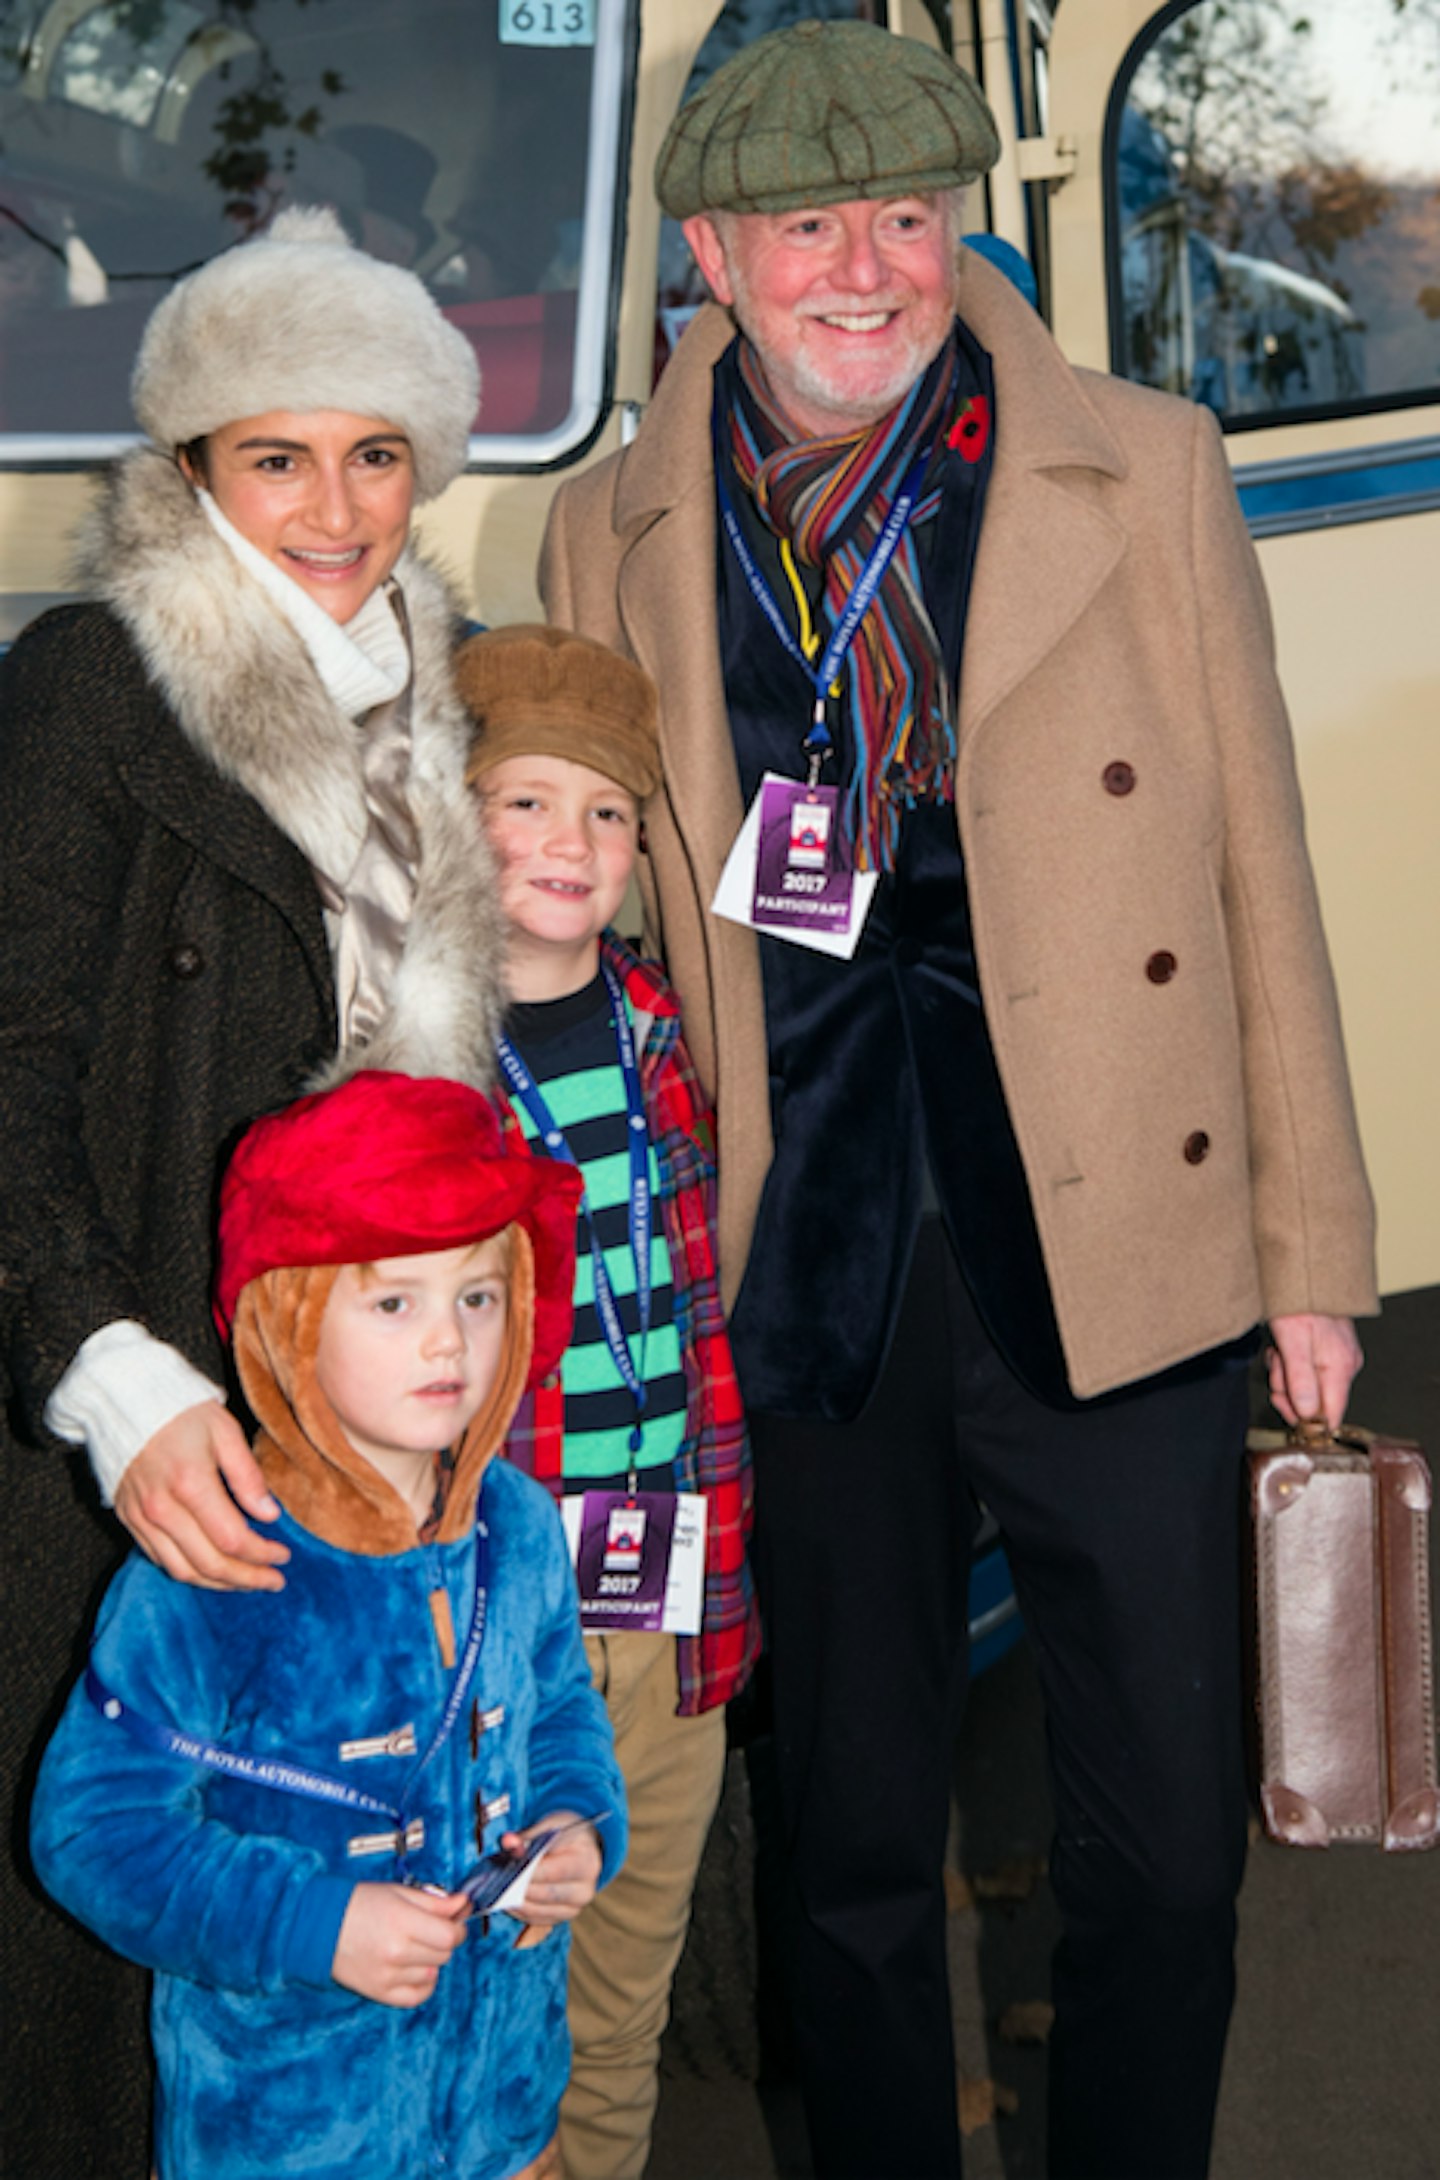 Chris Evans and his wife Natasha Shishmanian and their two sons